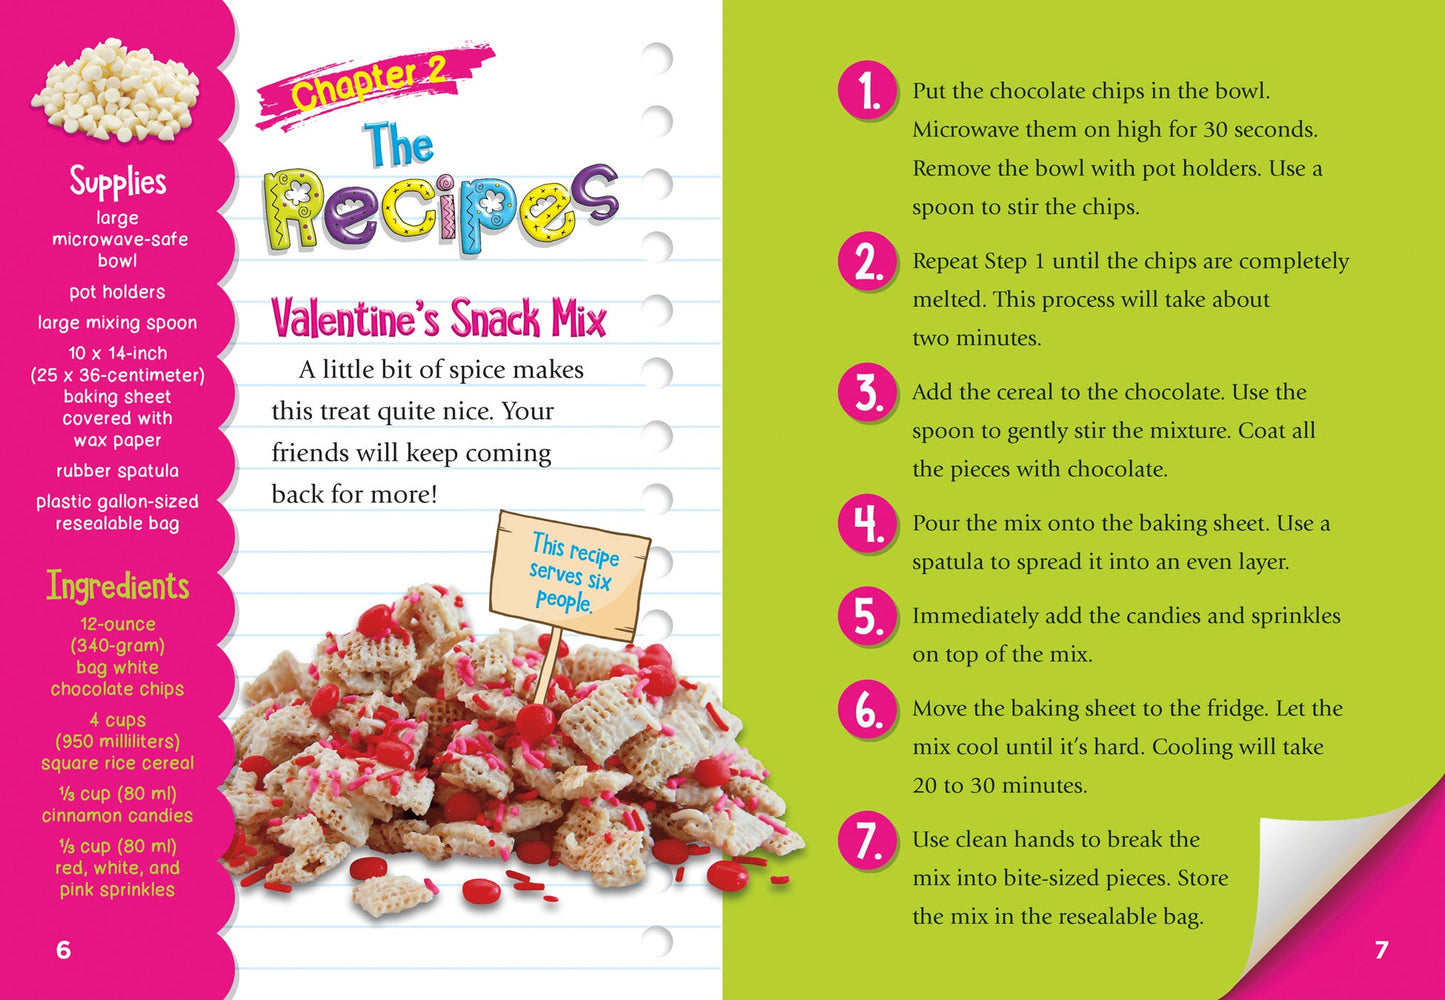 Holiday Recipe Box: The Valentine's Day Cookbook